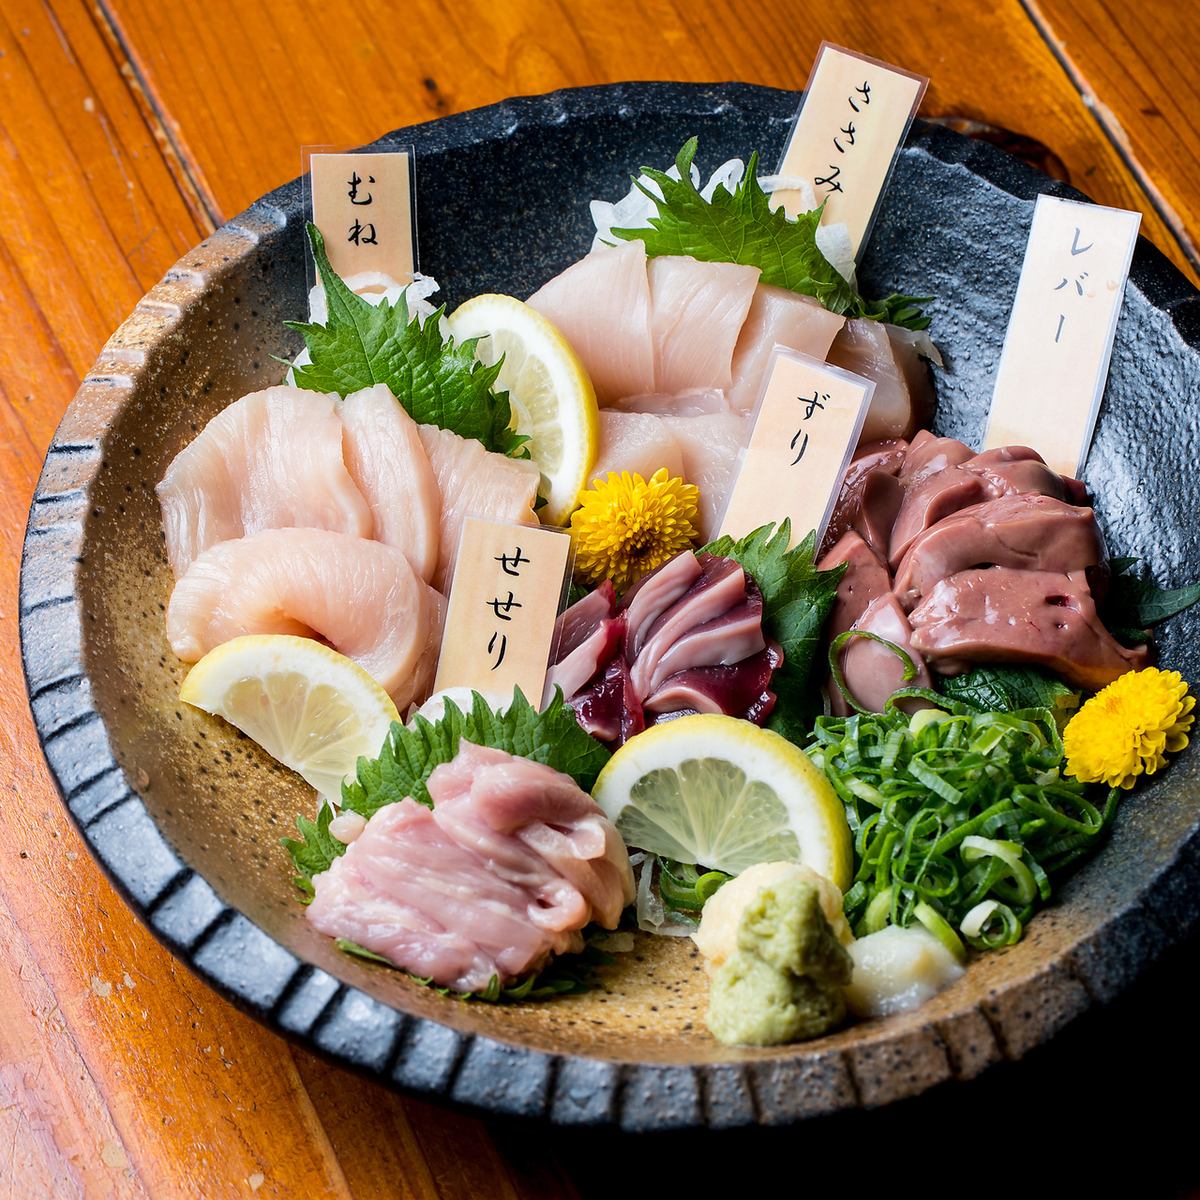 Please enjoy the morning-picked Oyamadori chicken sashimi and other extremely fresh dishes.